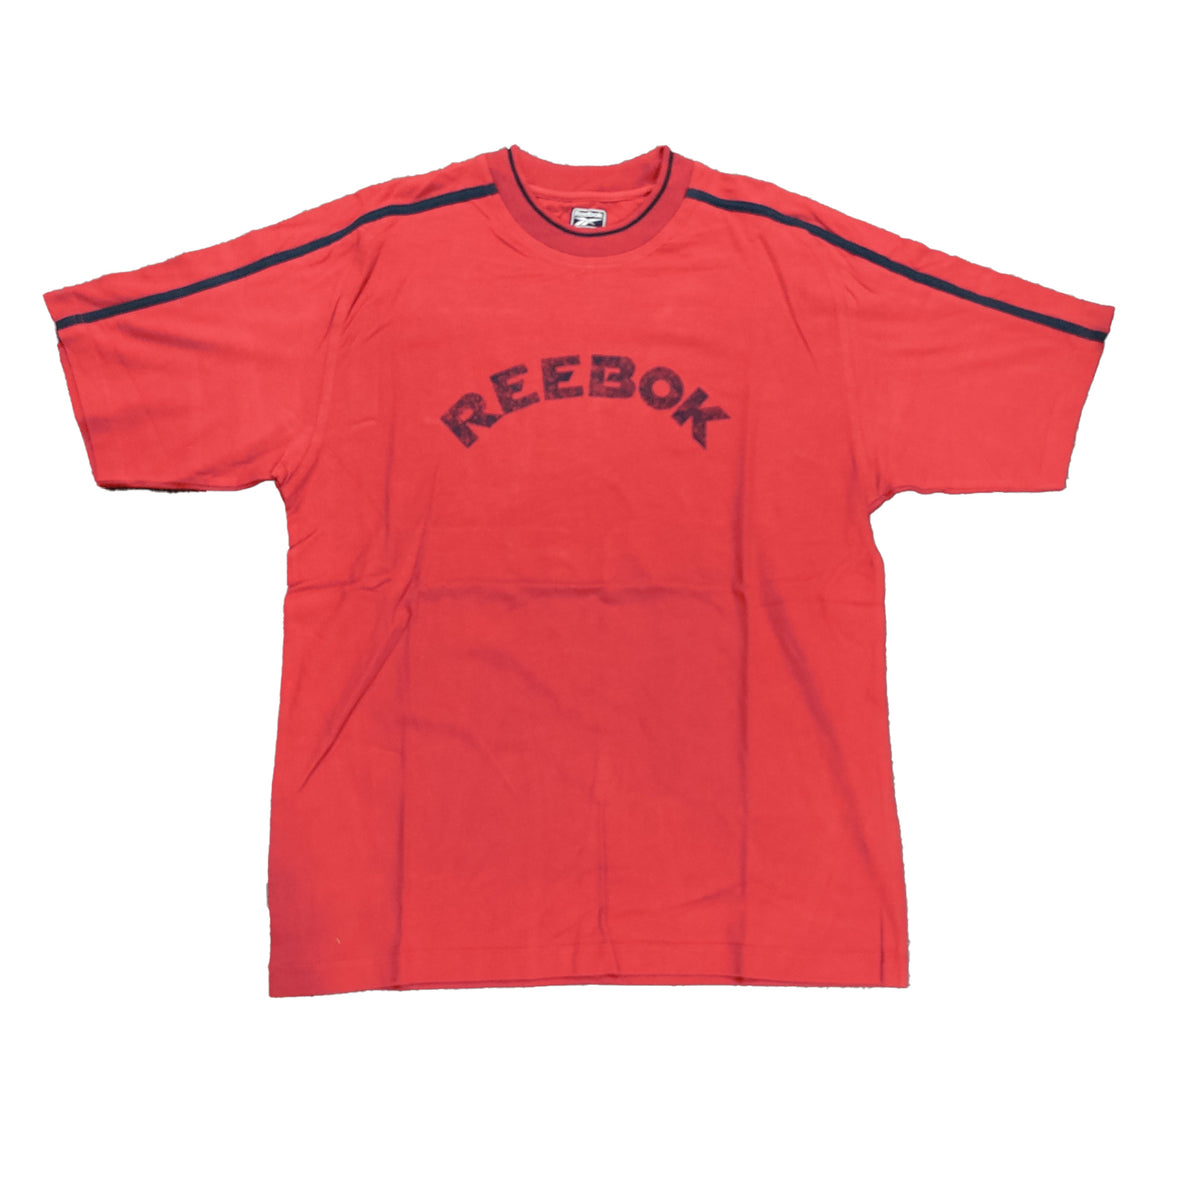 Reebok Mens Clearance One Line Crew Red T-Shirt - Medium